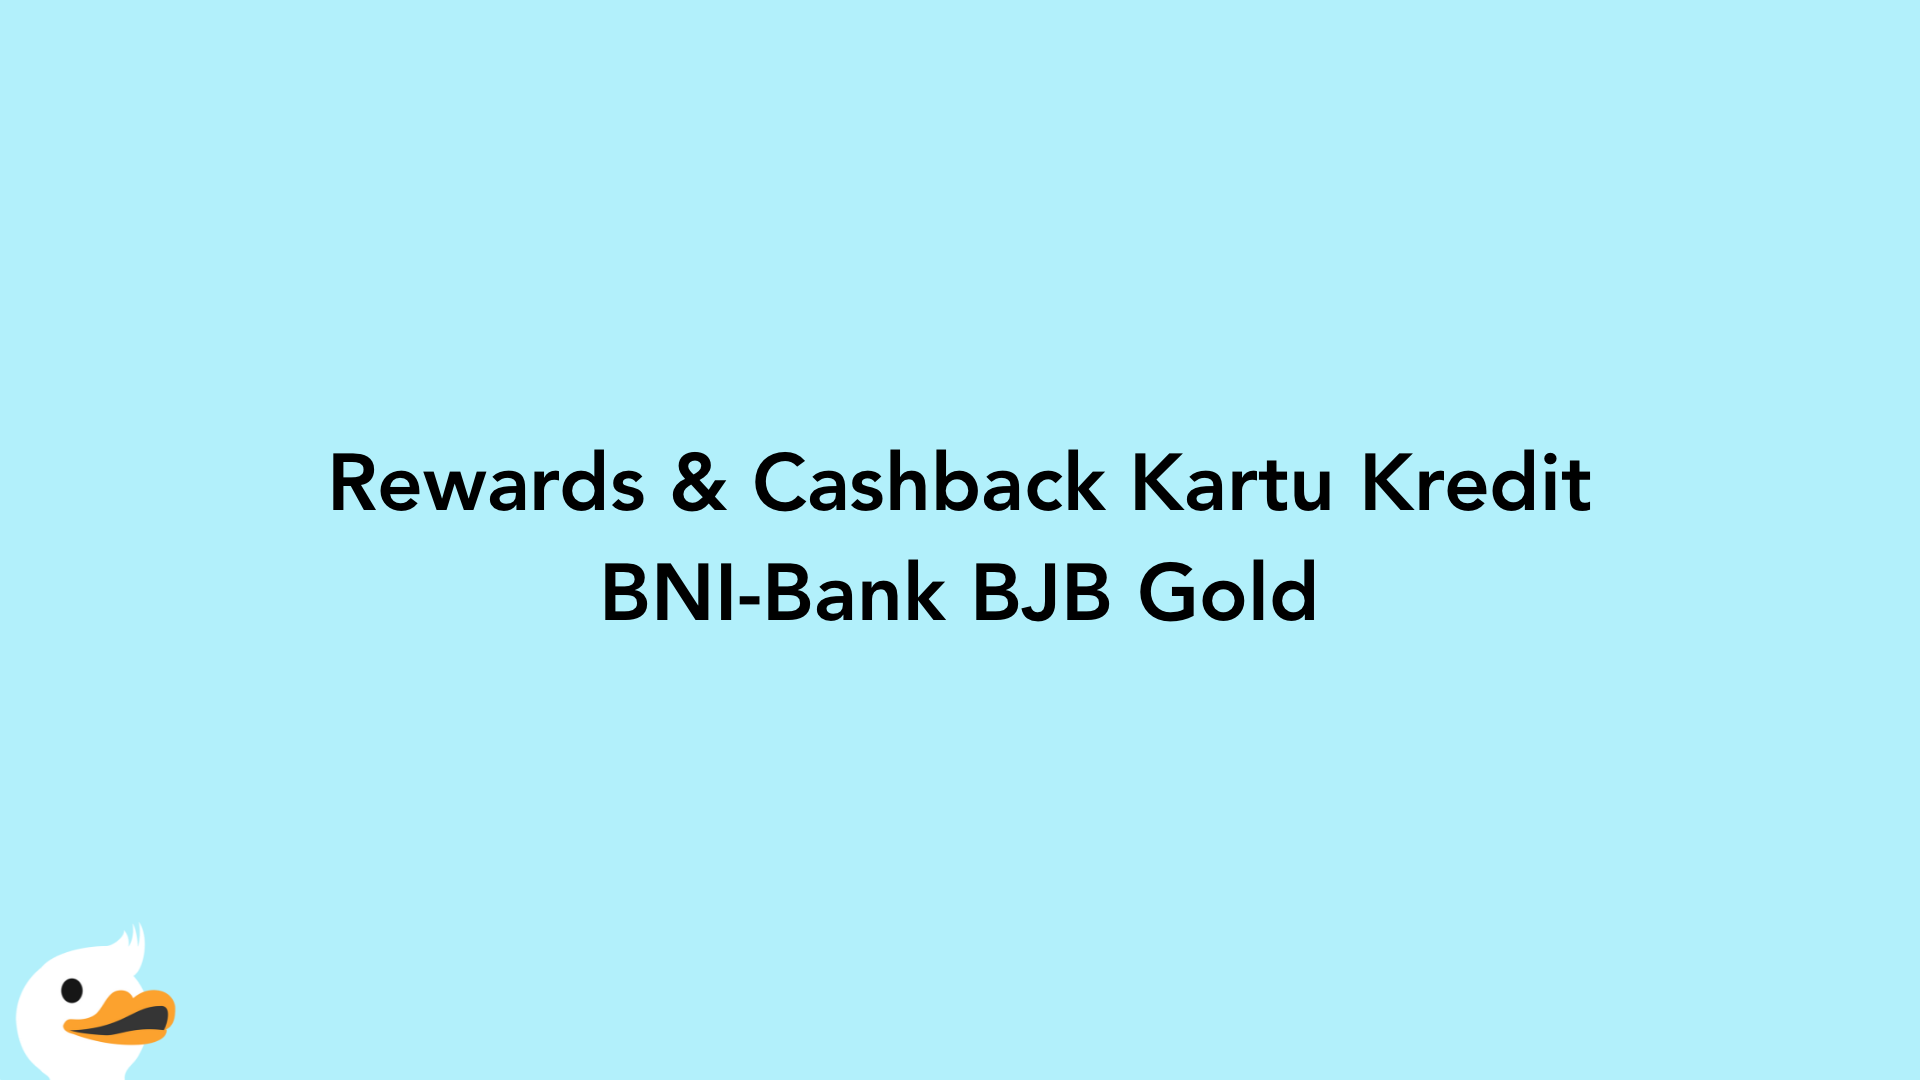 Rewards & Cashback Kartu Kredit BNI-Bank BJB Gold